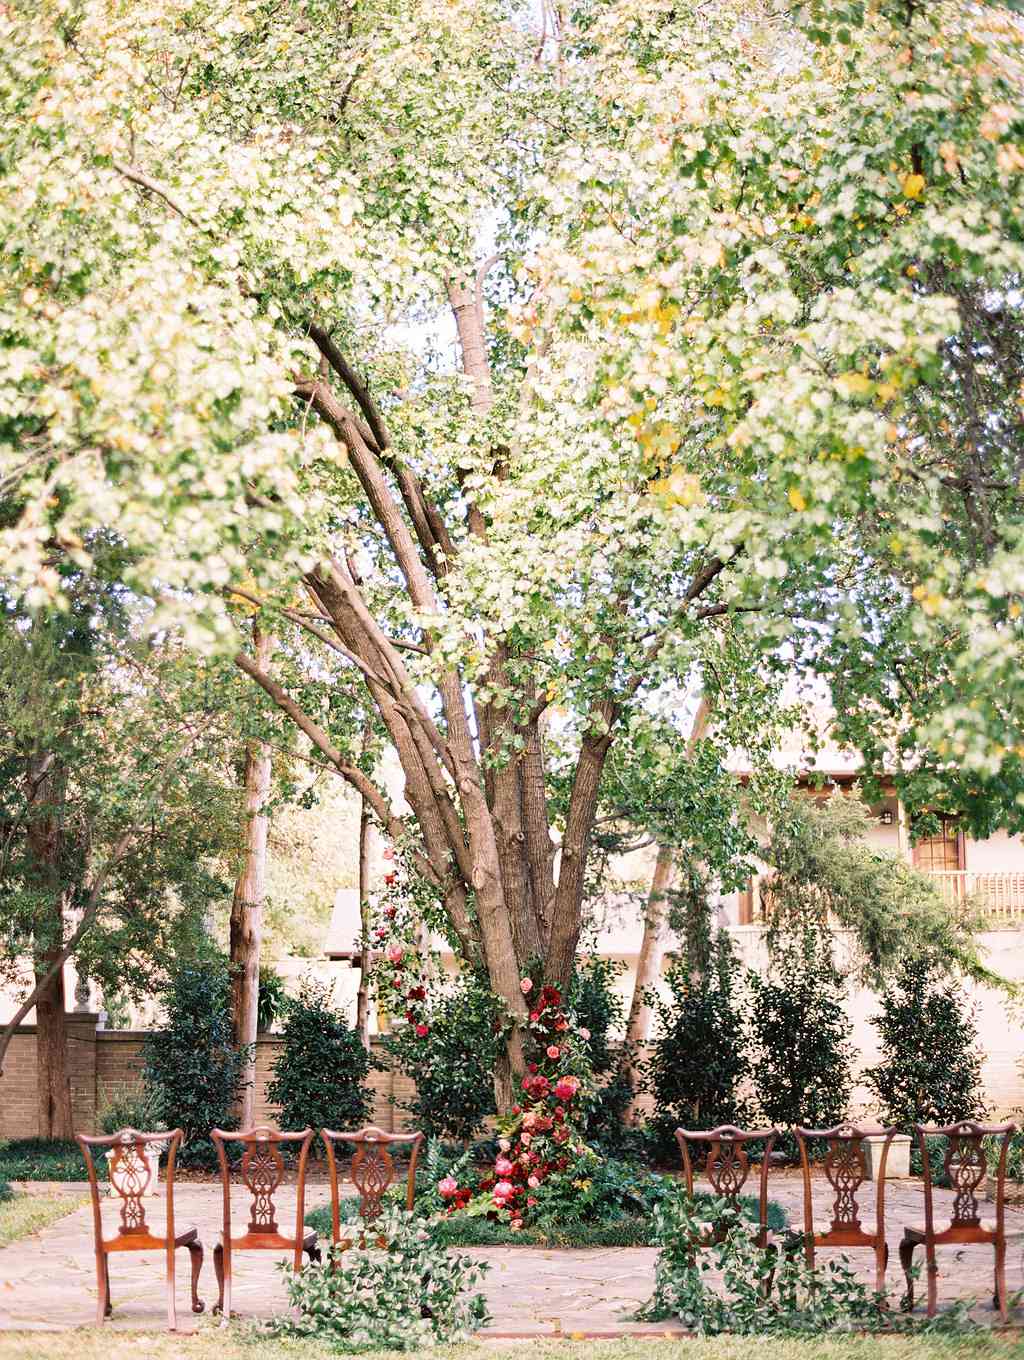 yolanda cedric wedding ceremony tree